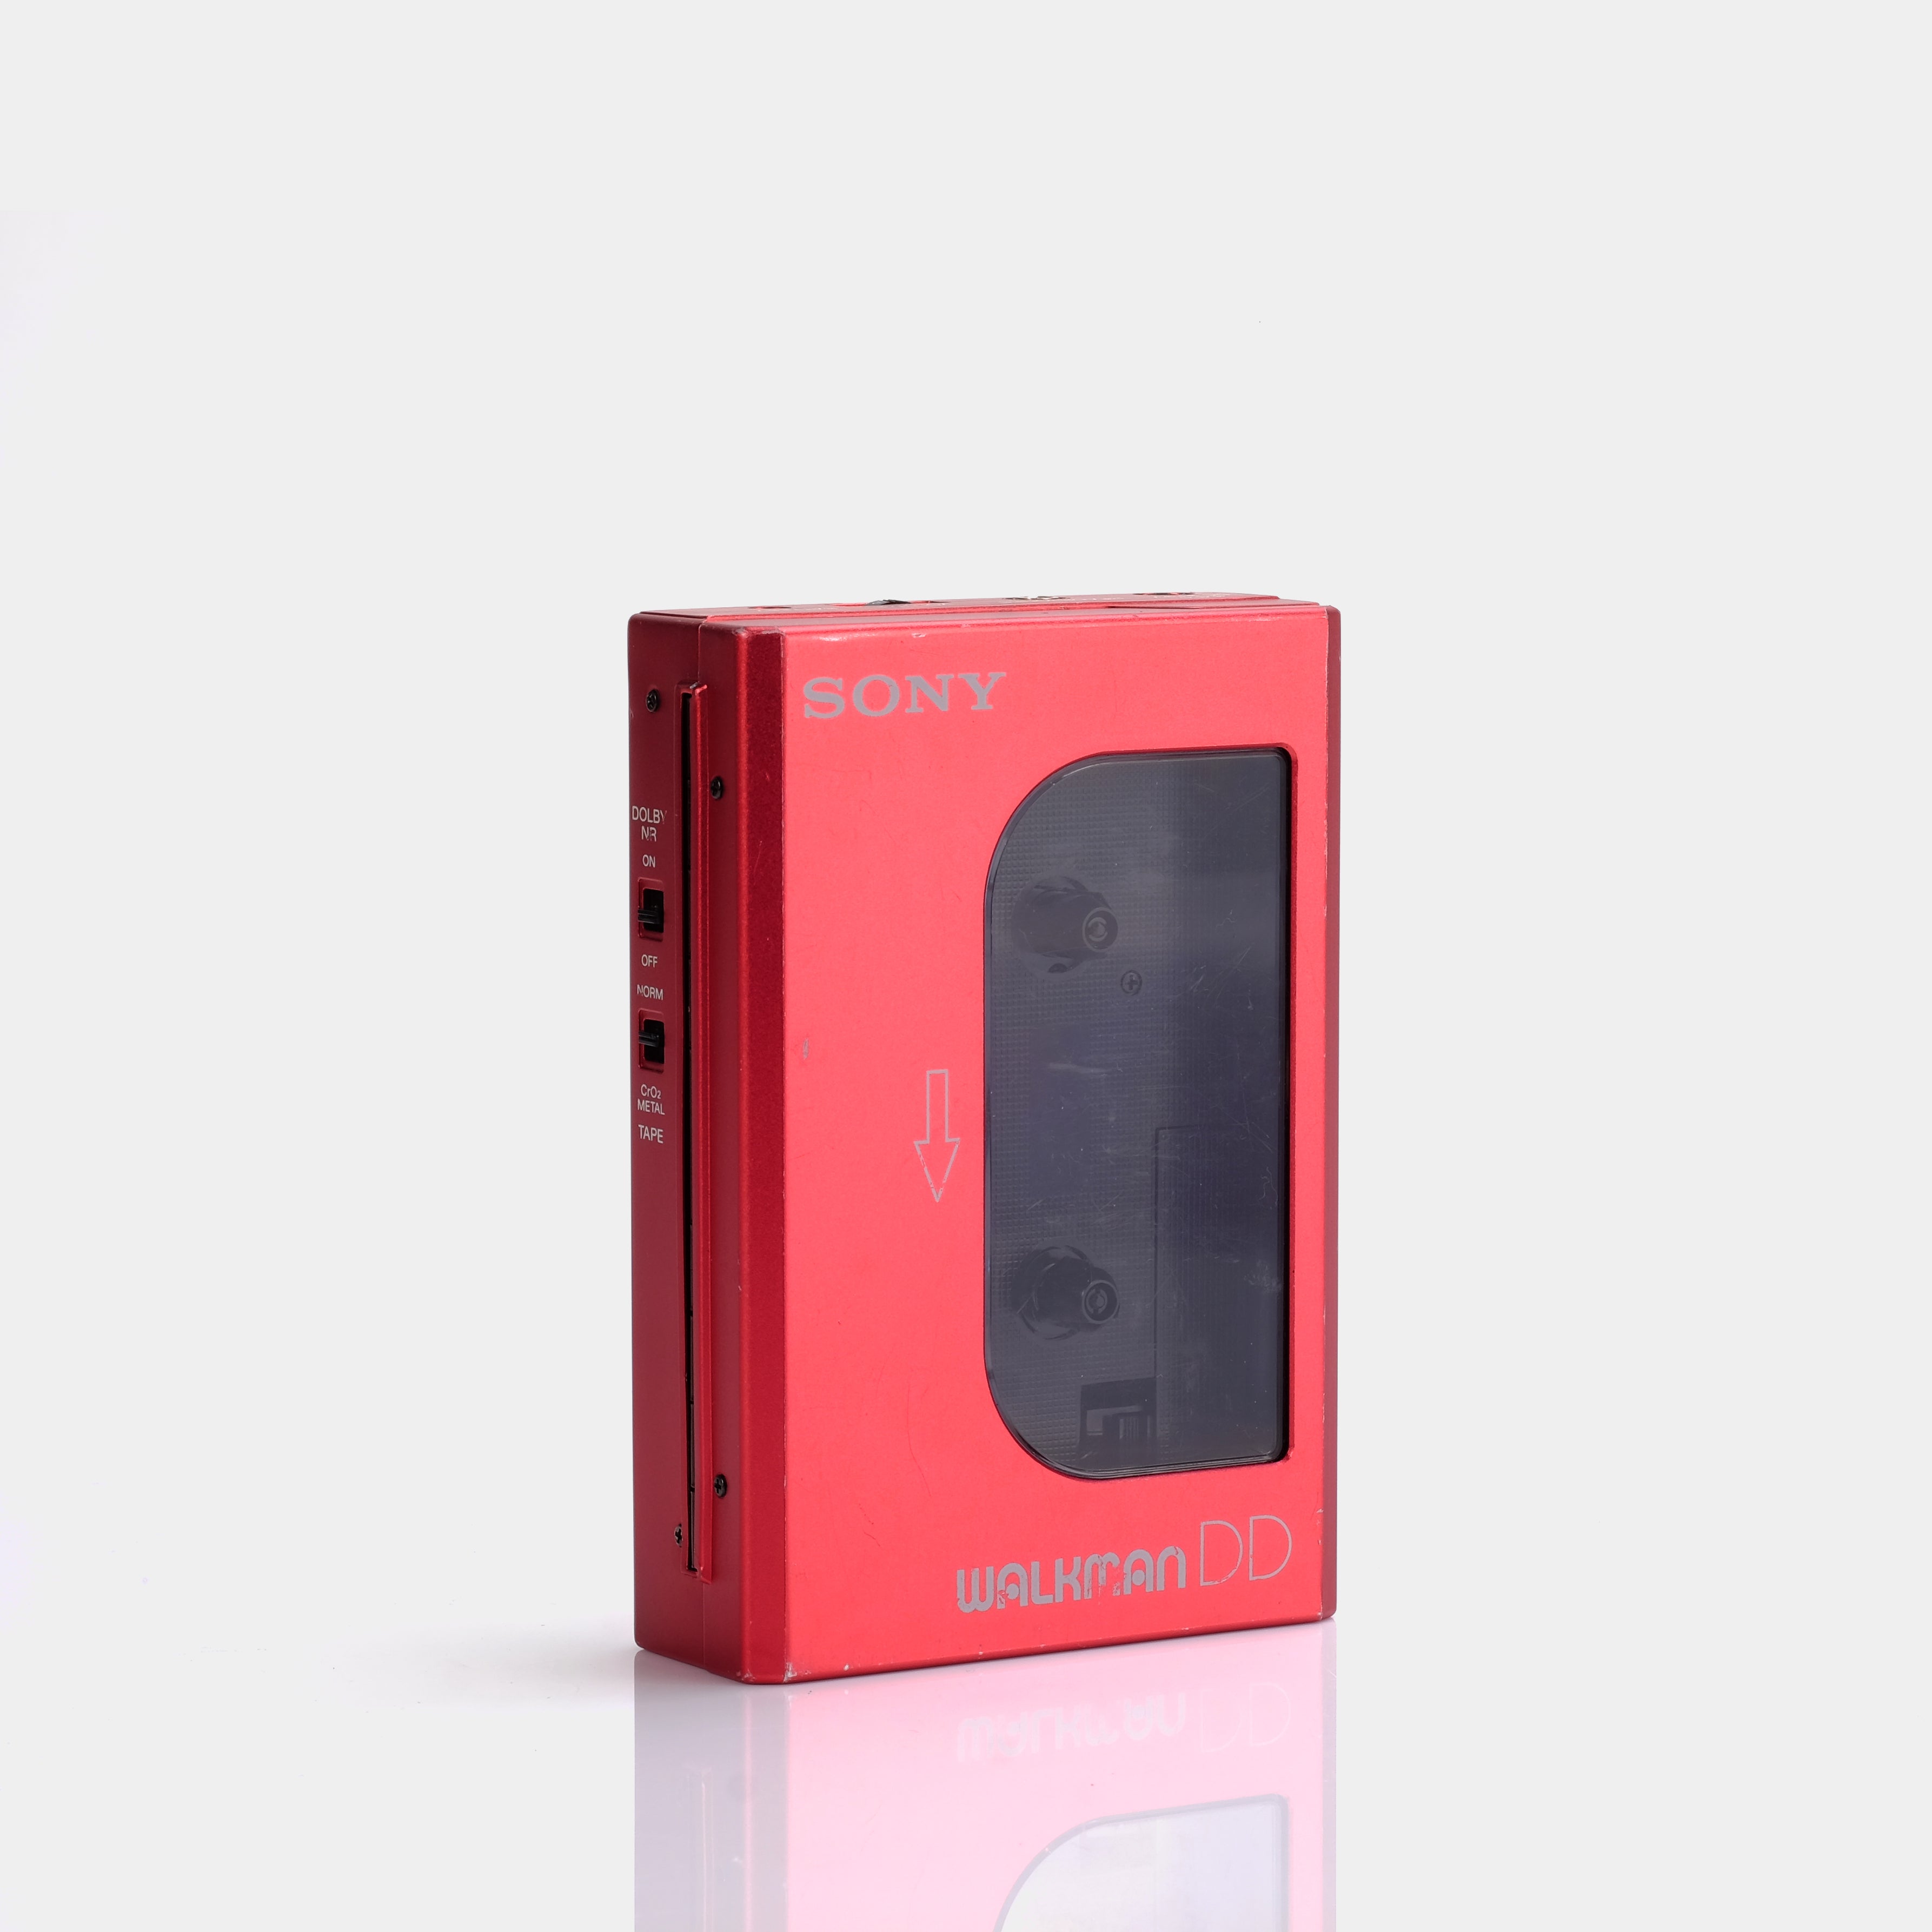 Sony Walkman WM-DD10 Red Portable Cassette Player